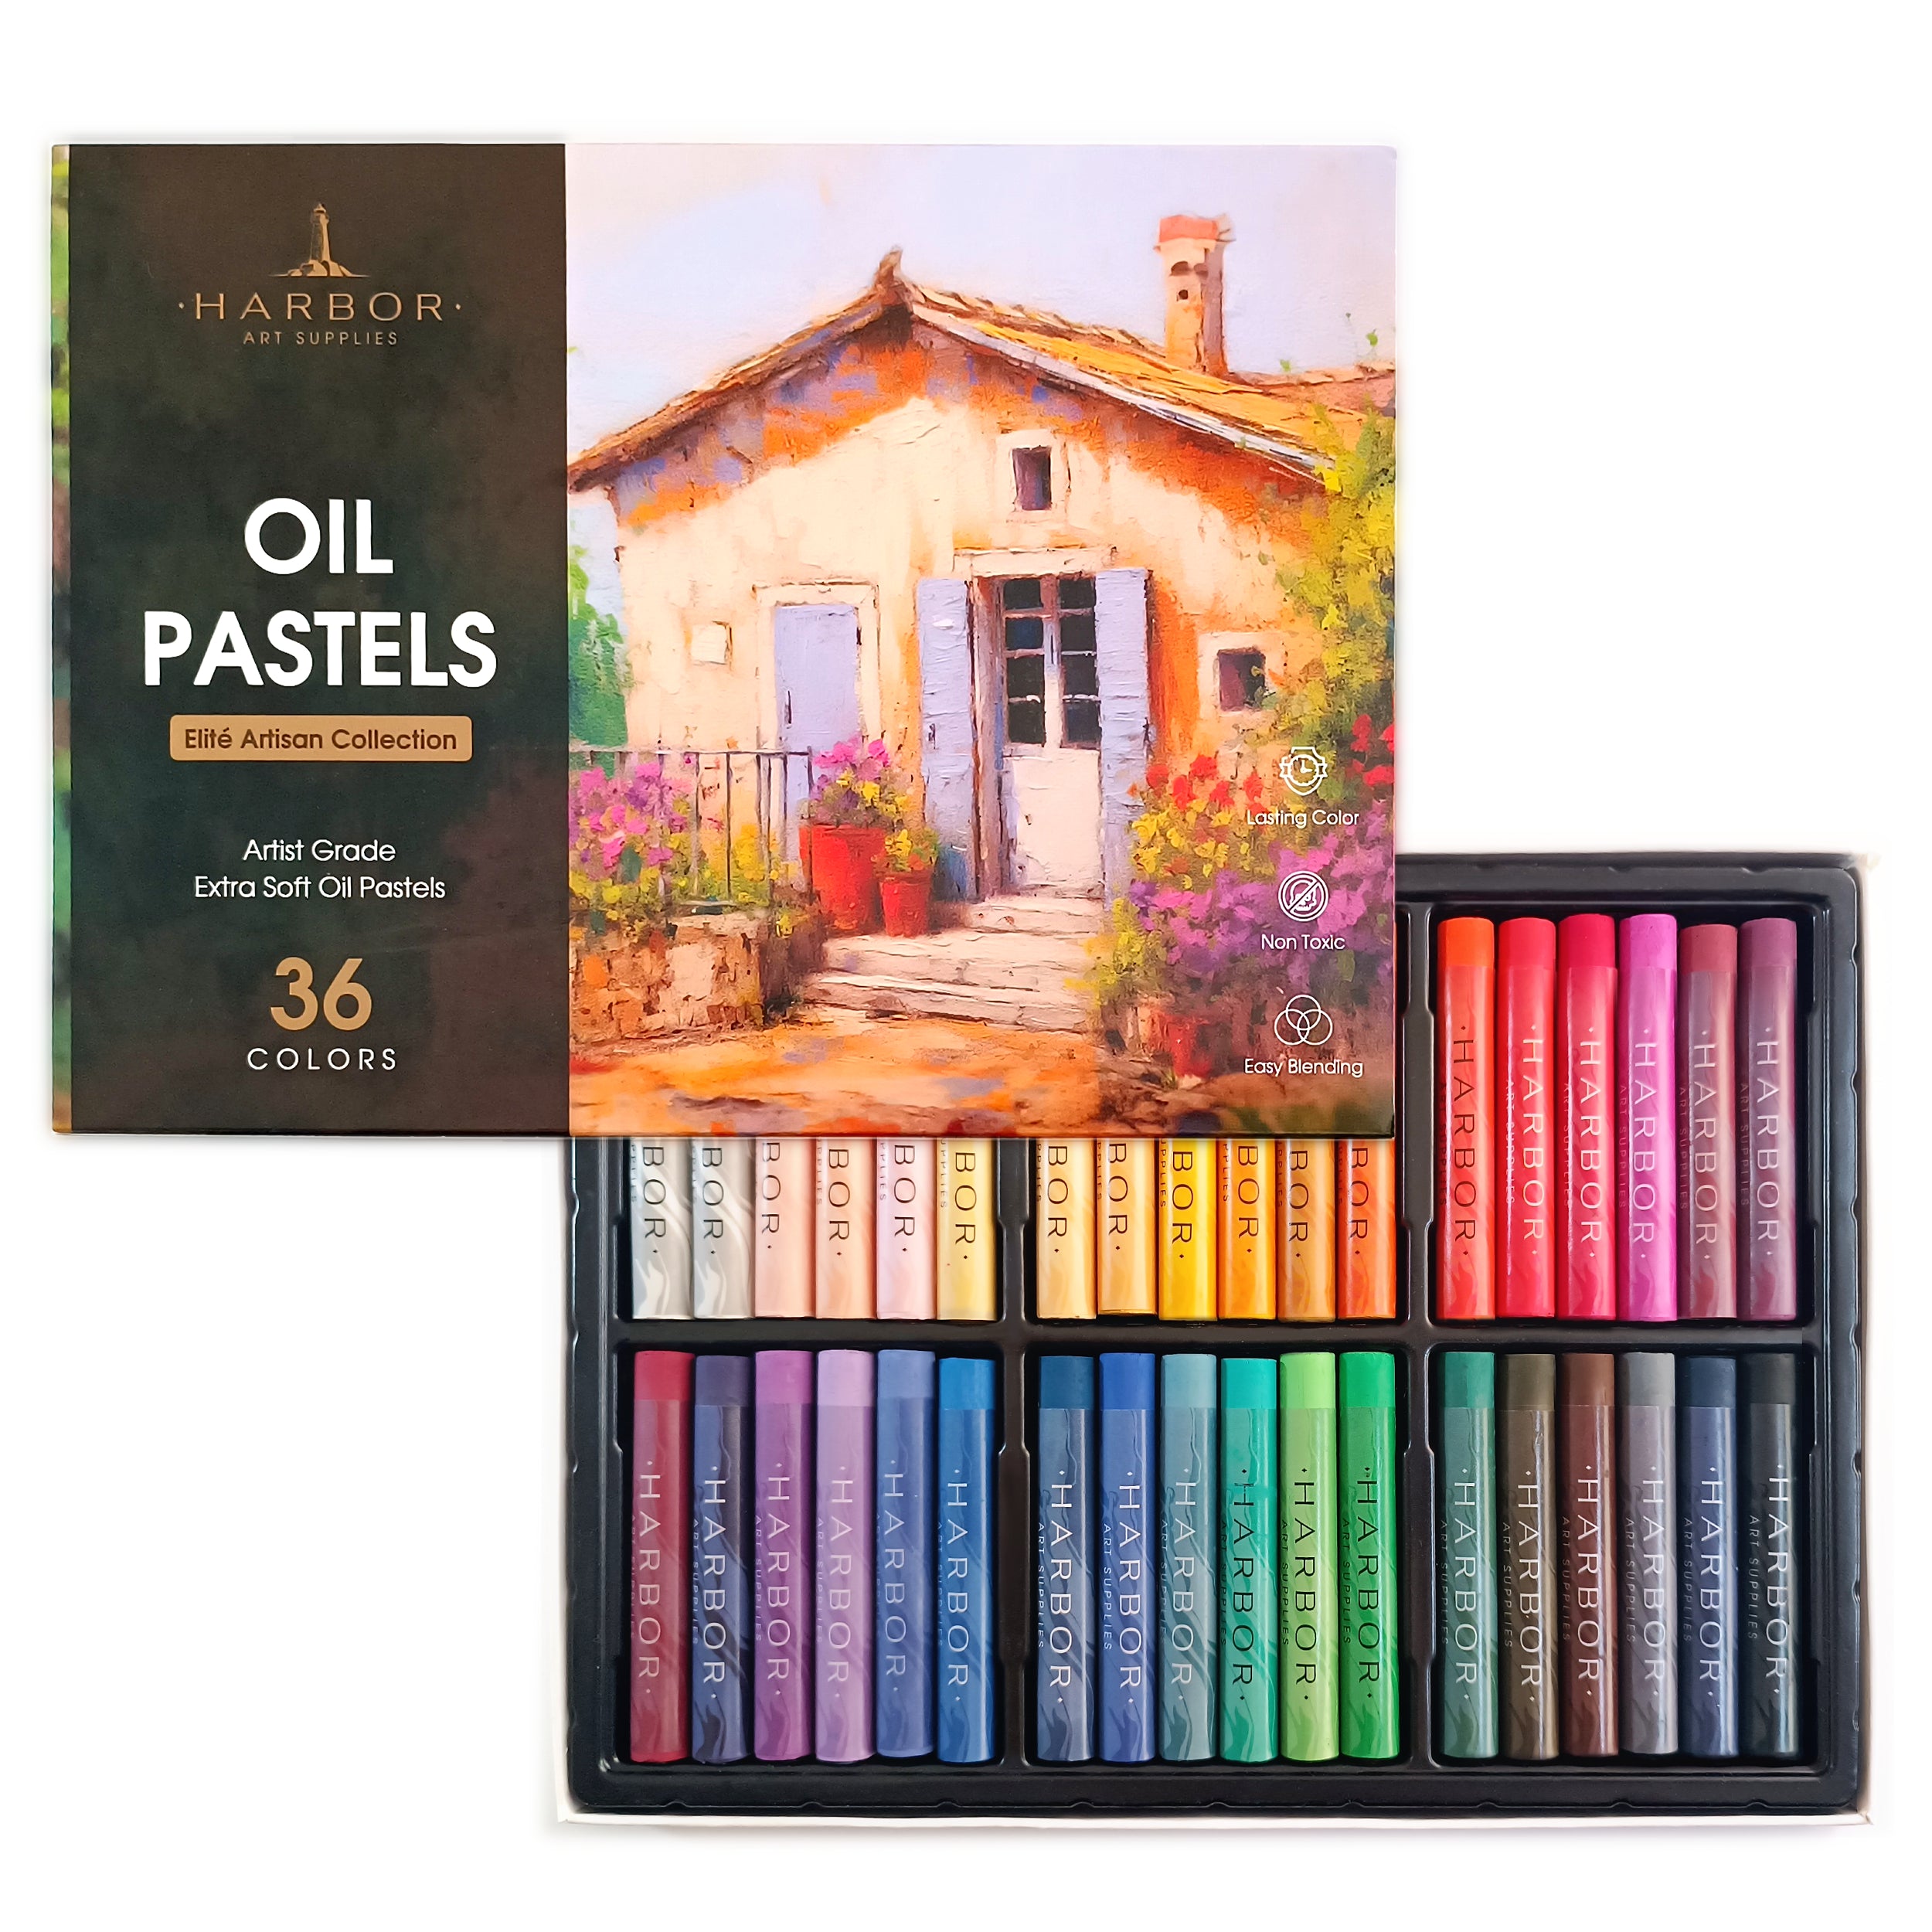 Elite Artisan Oil Pastels (36 Count) – Harbor Art Supplies